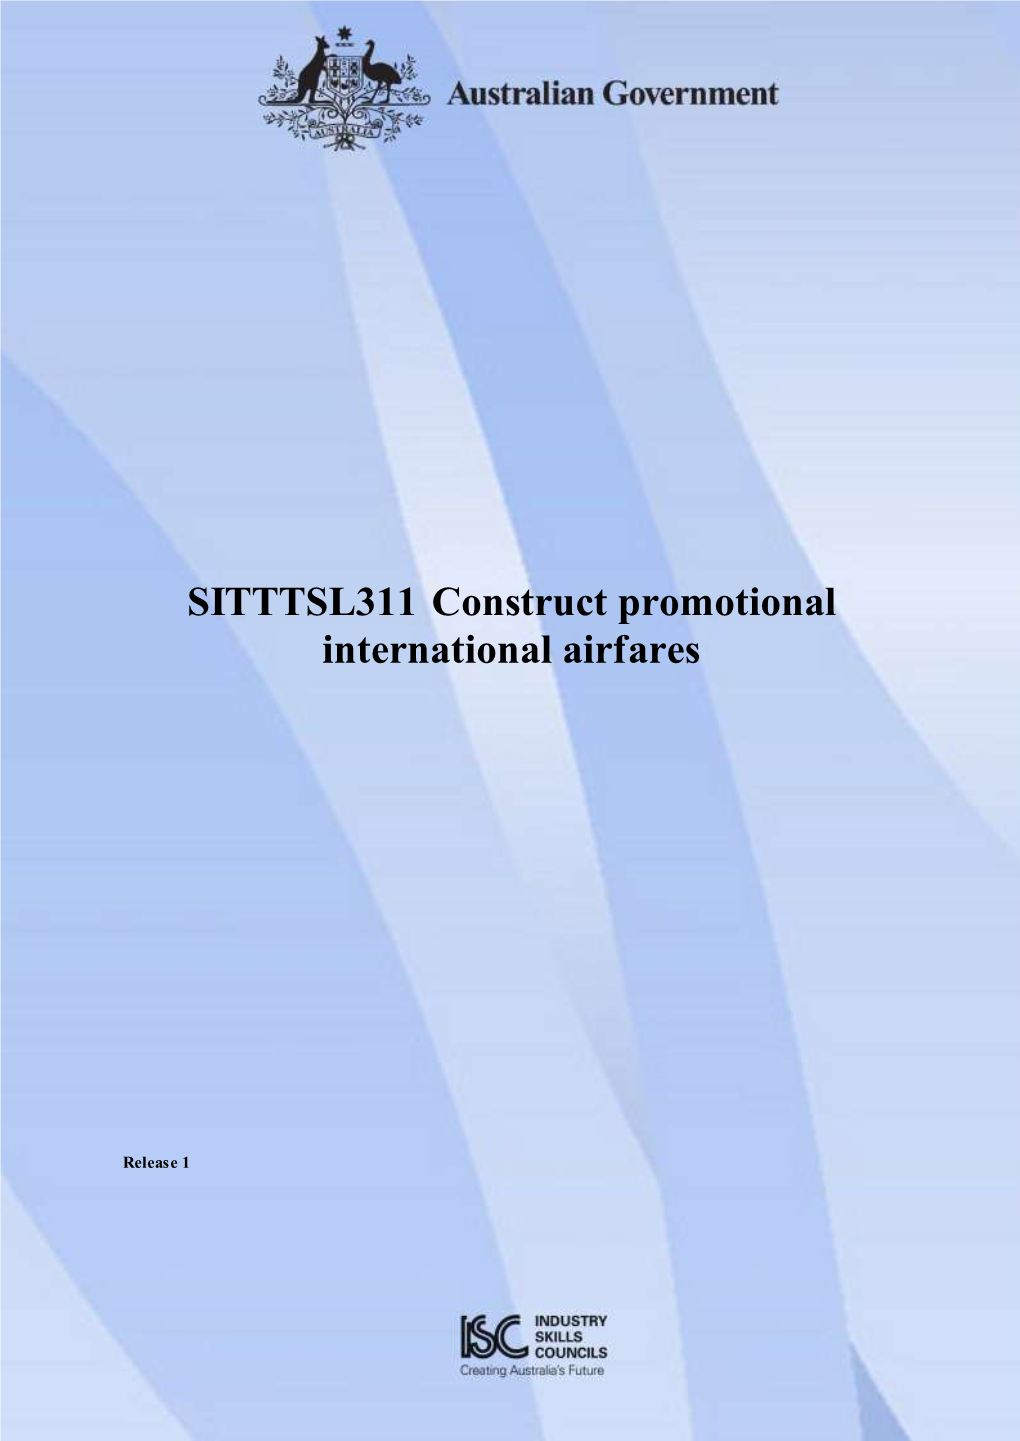 SITTTSL311 Construct Promotional International Airfares